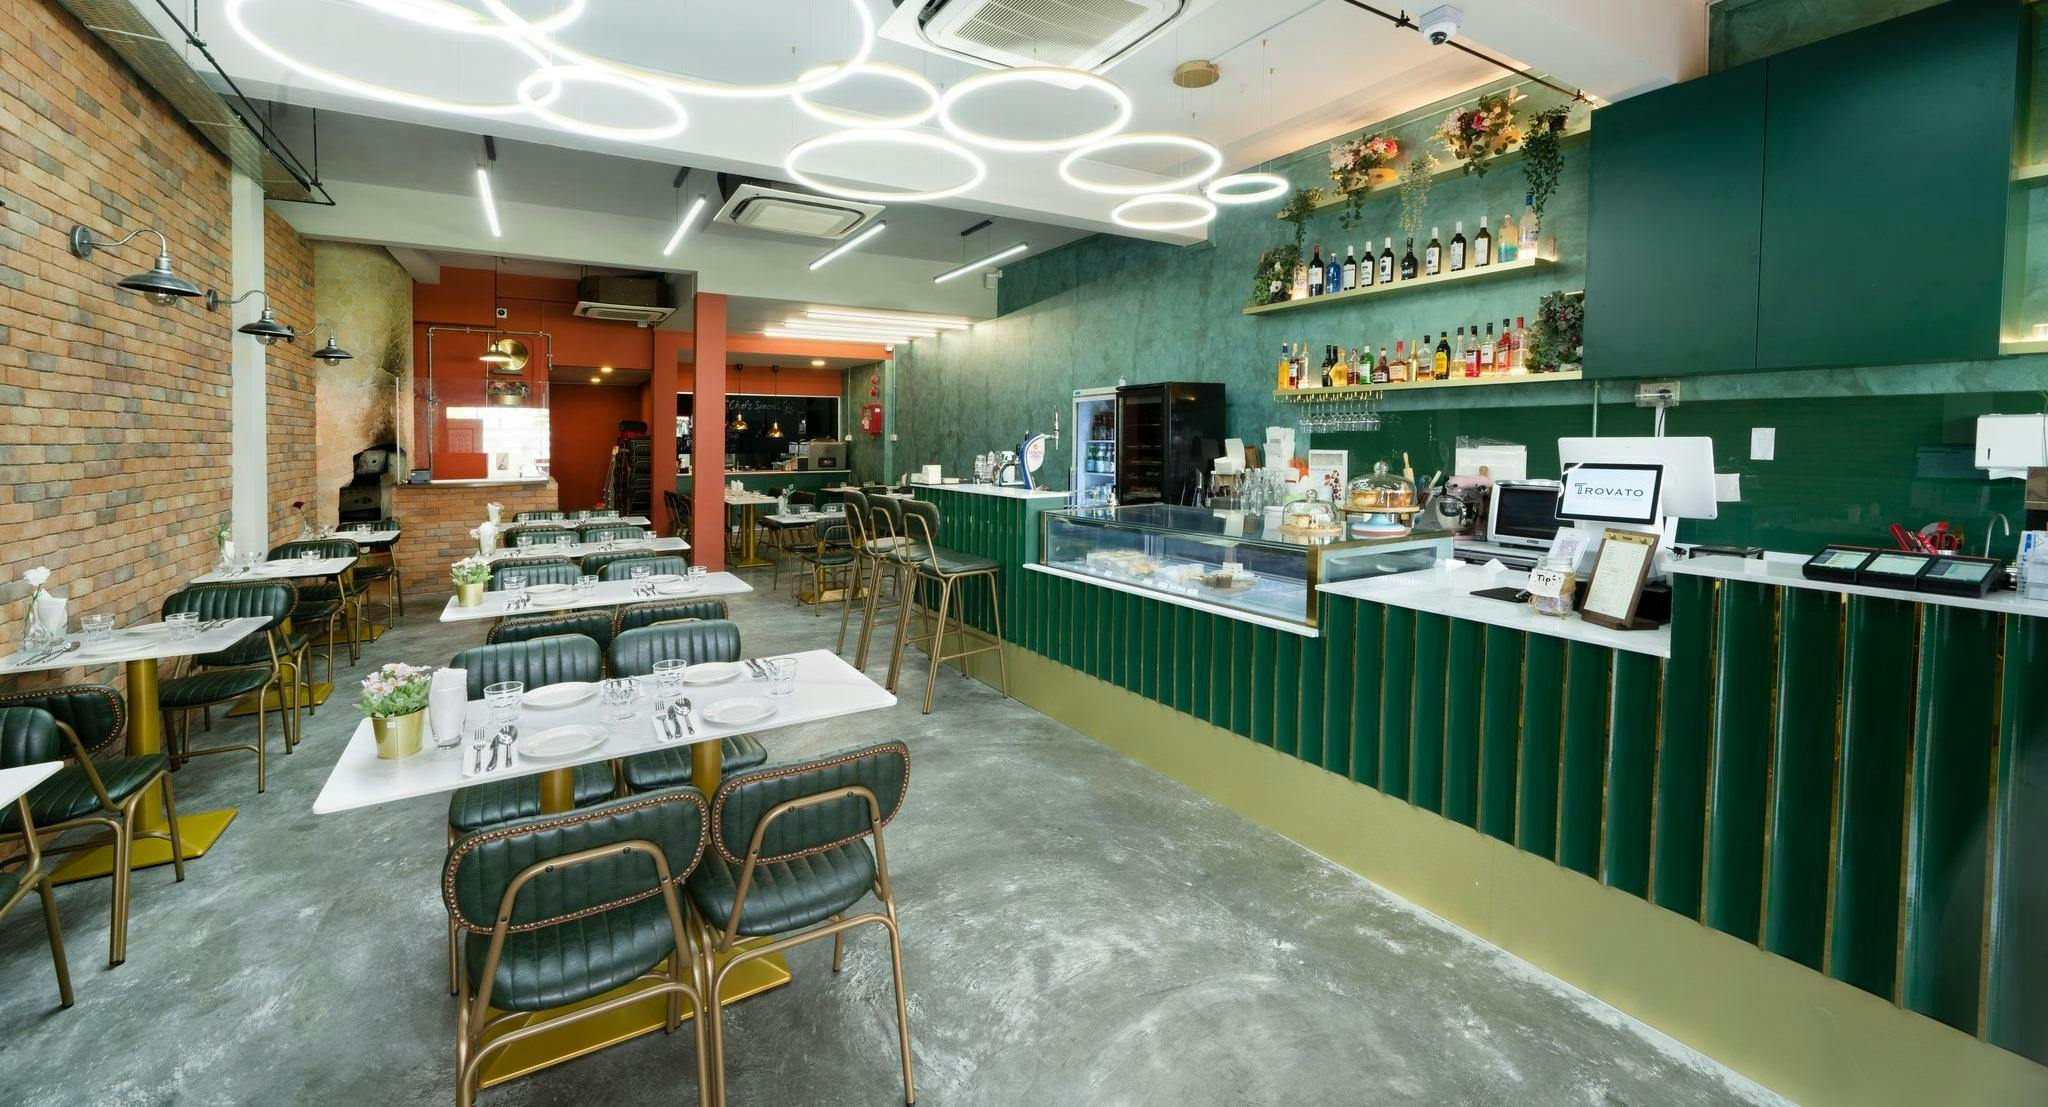 Photo of restaurant Trovato in Yio Chu Kang, Singapore